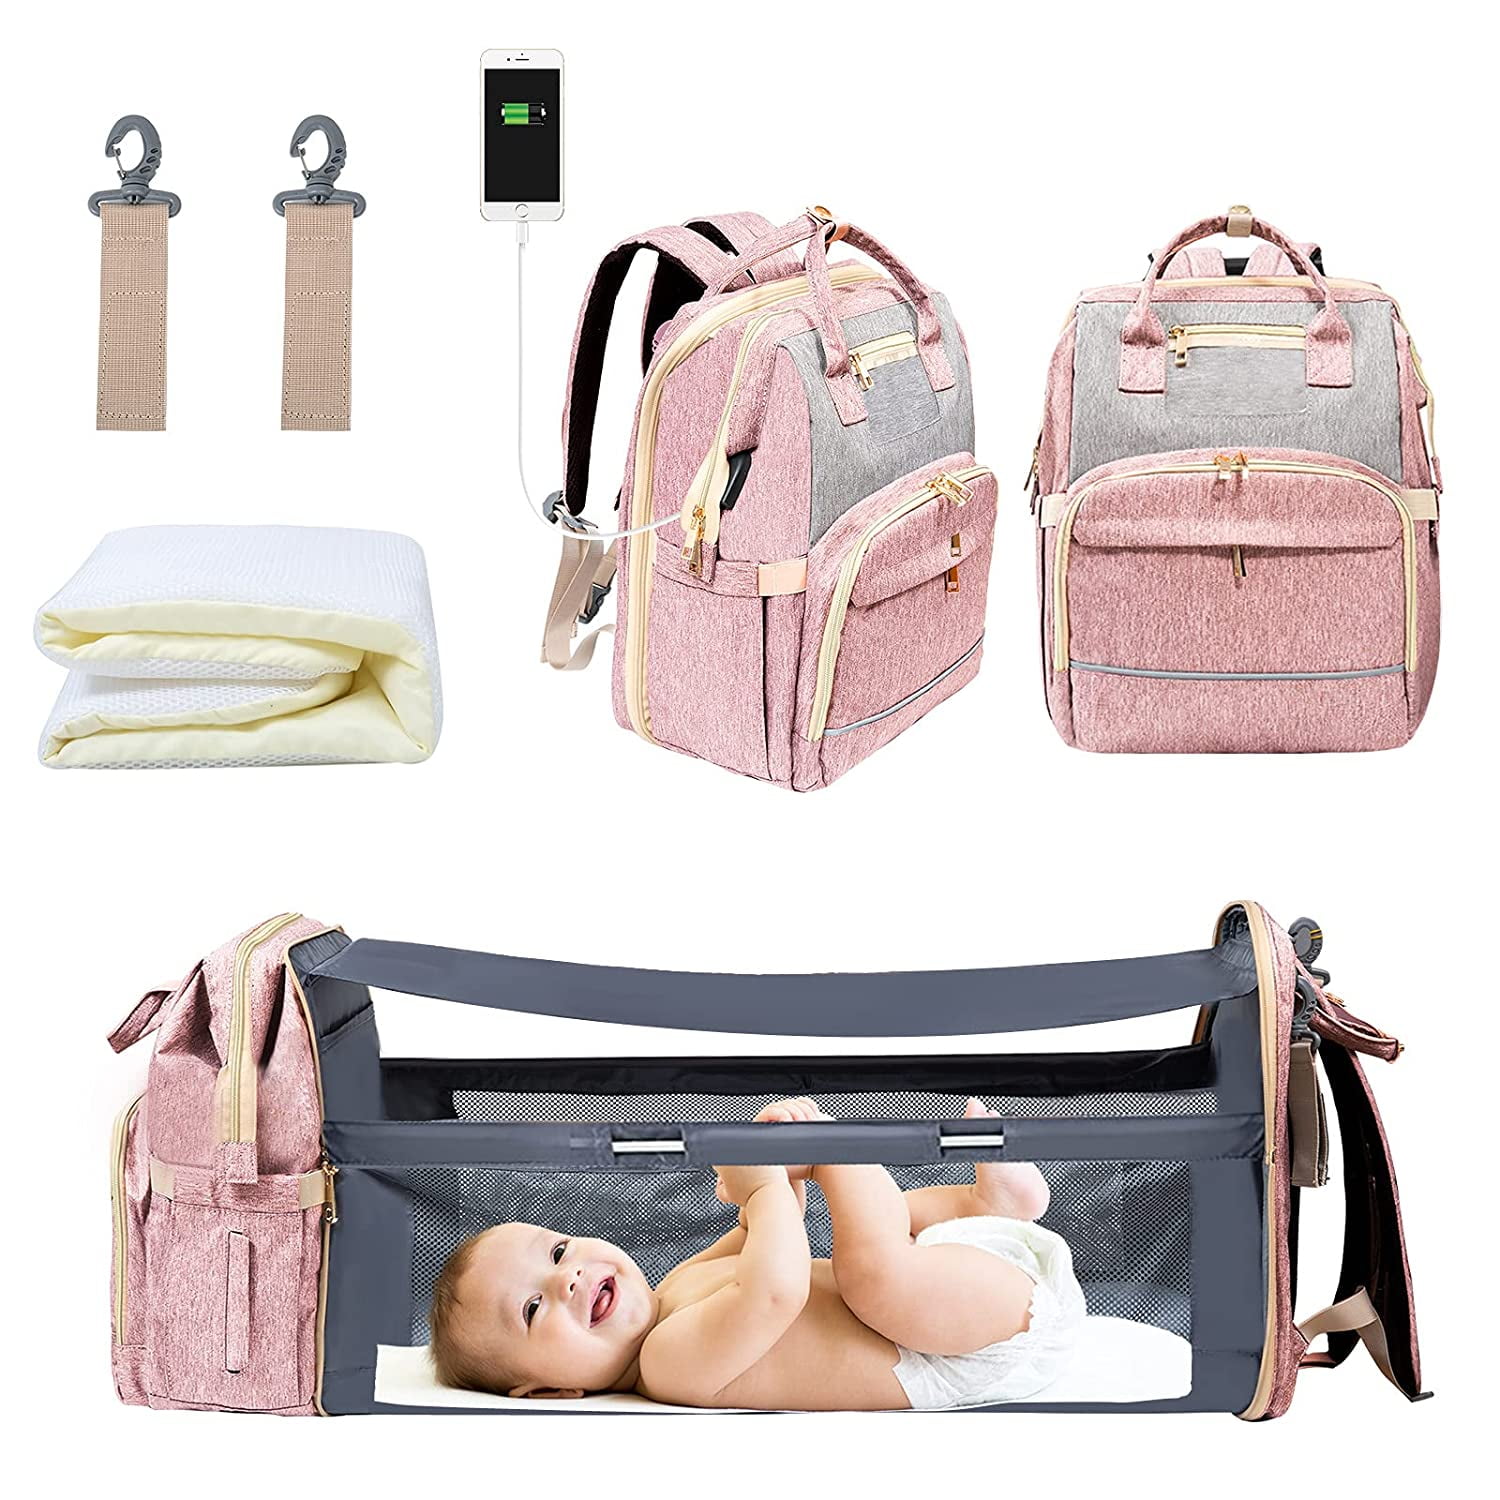 Disney Diaper Bag Backpack Baby Bags for Mom Wet Bag Fashion Mummy  Maternity Diaper Organizer USB Travel Bag Stroller Hanging - AliExpress